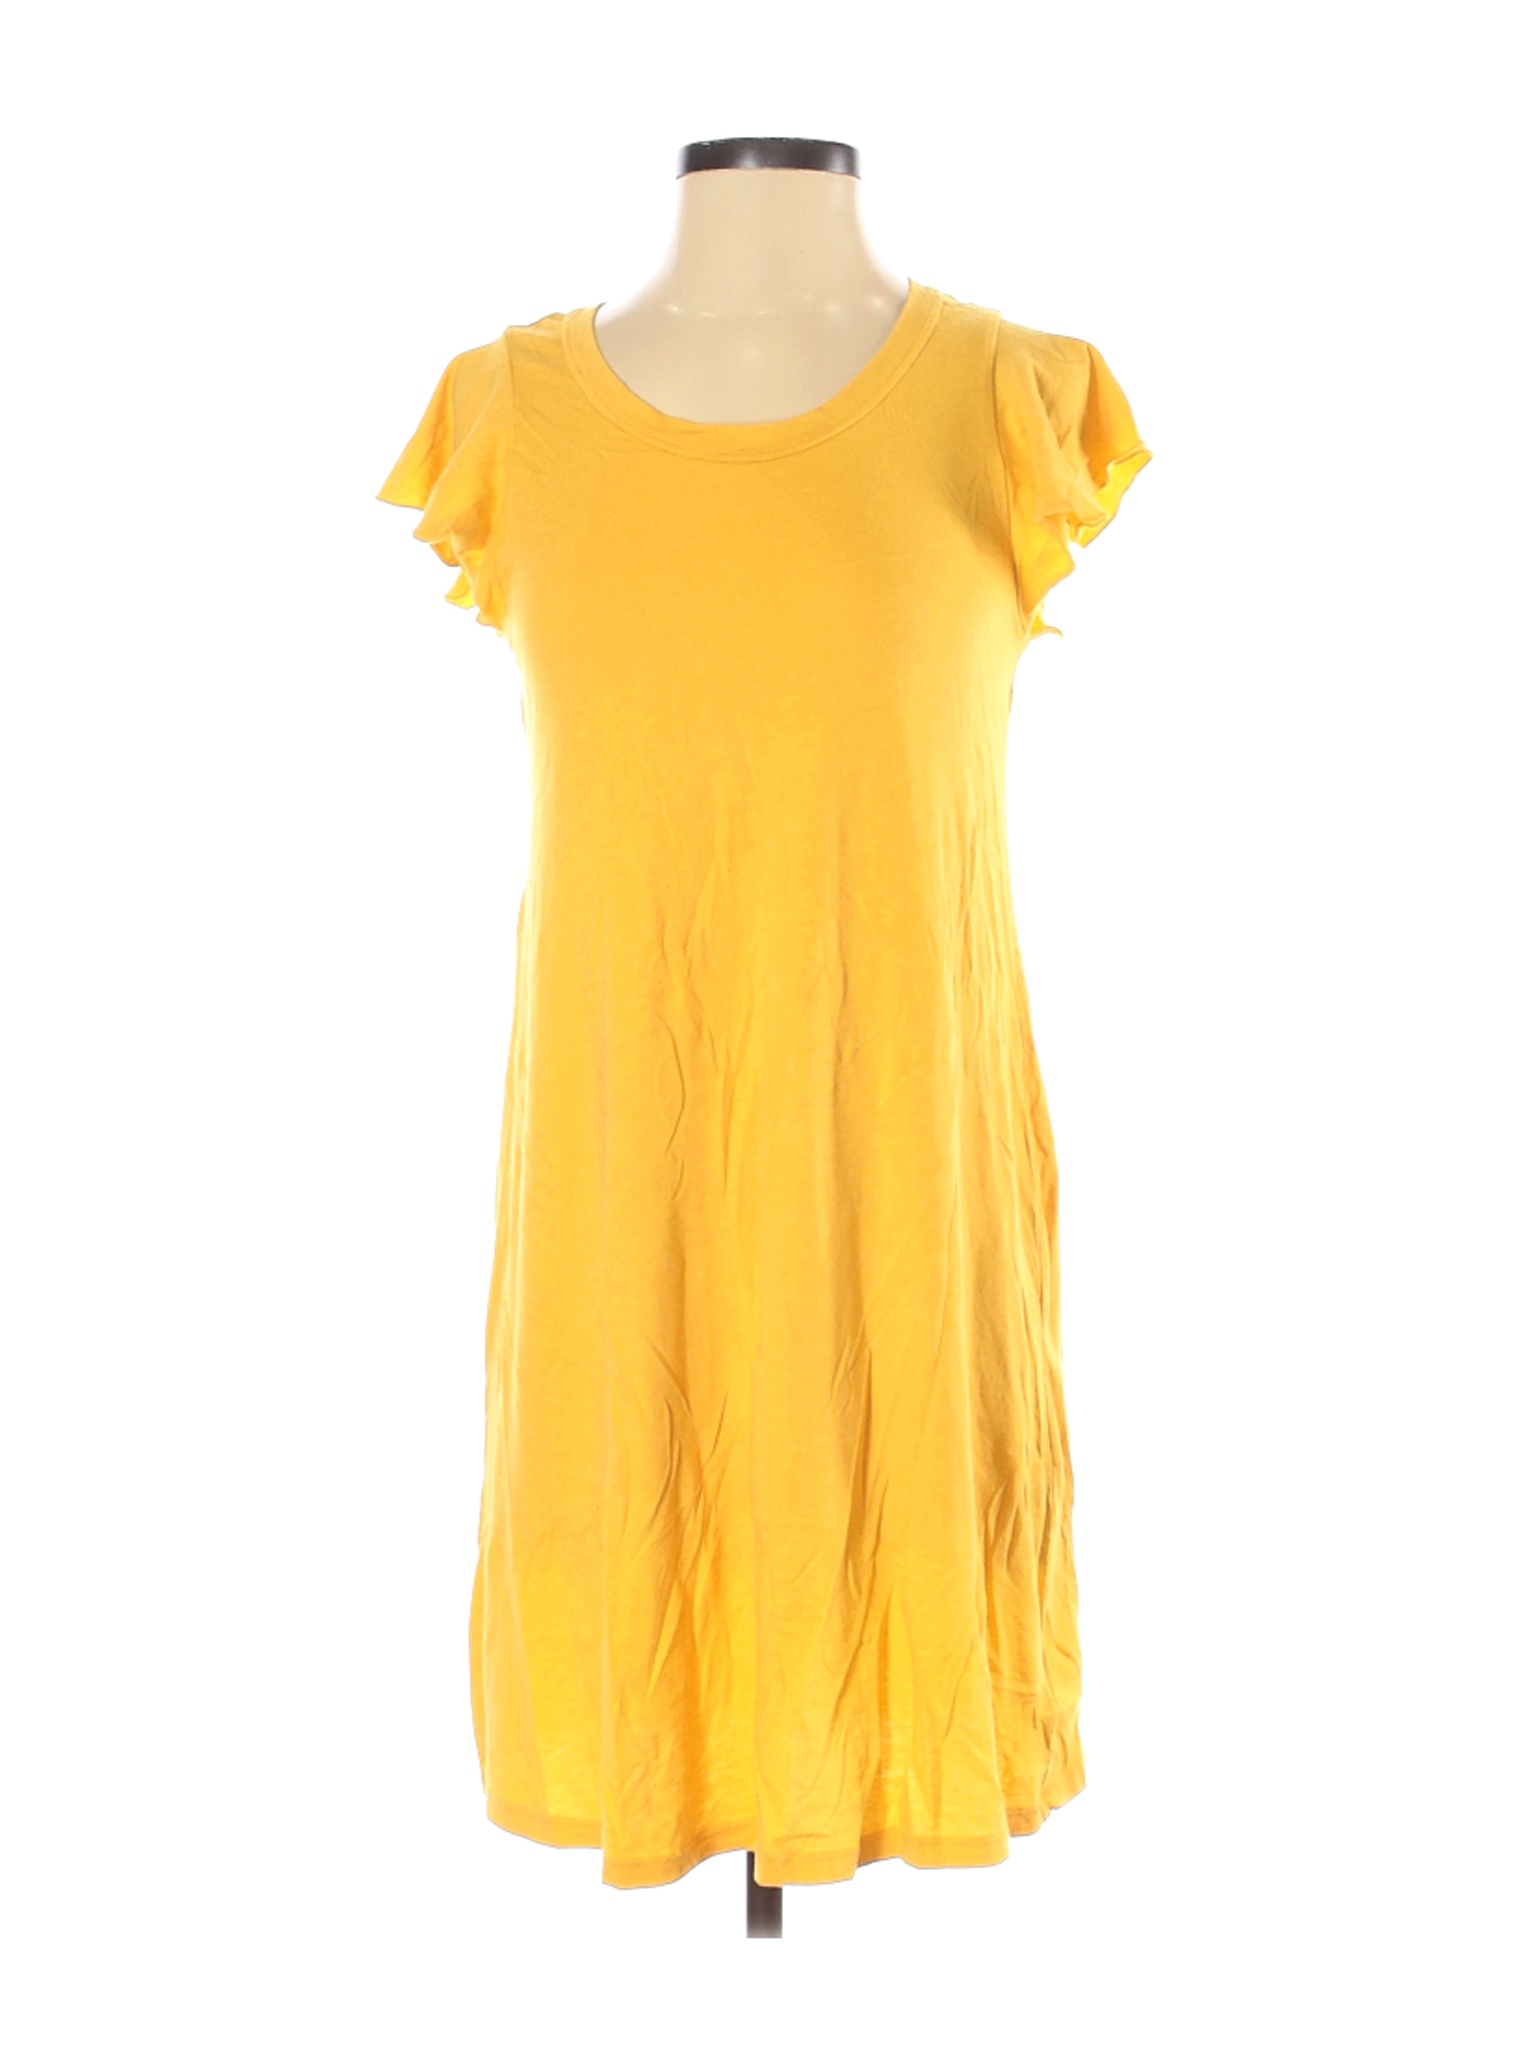 Gap Women Yellow Casual Dress XS | eBay